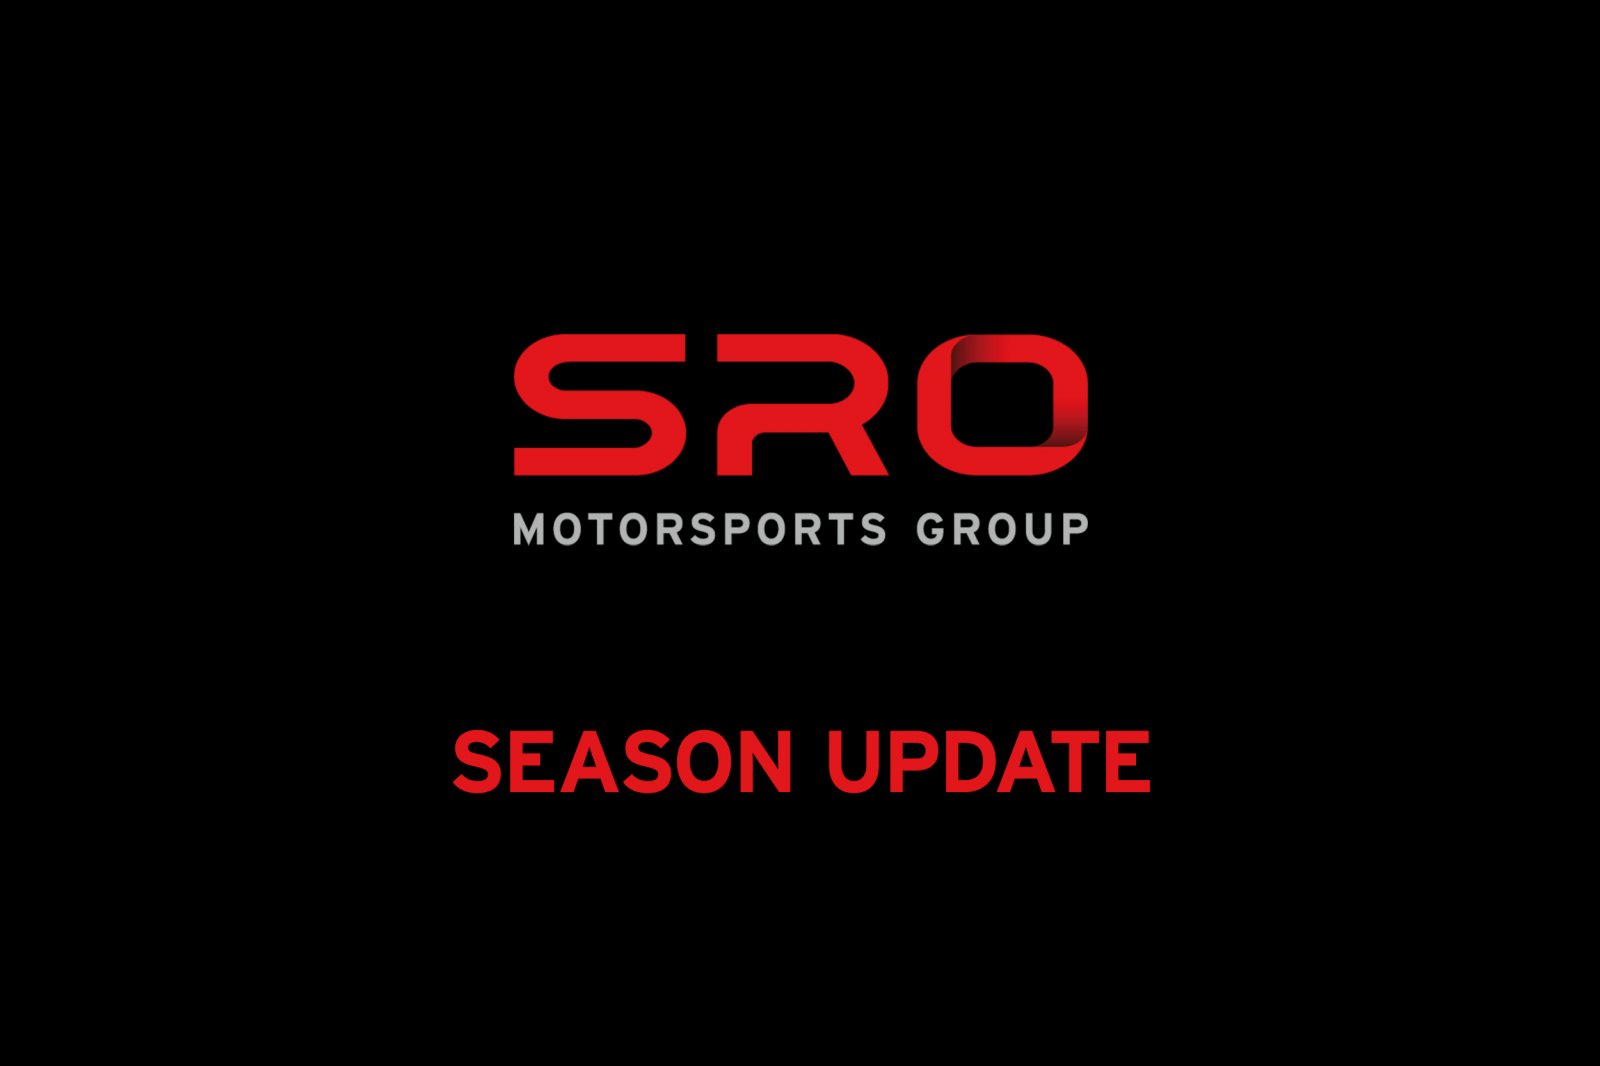 SRO Motorsports Group 2020 season update